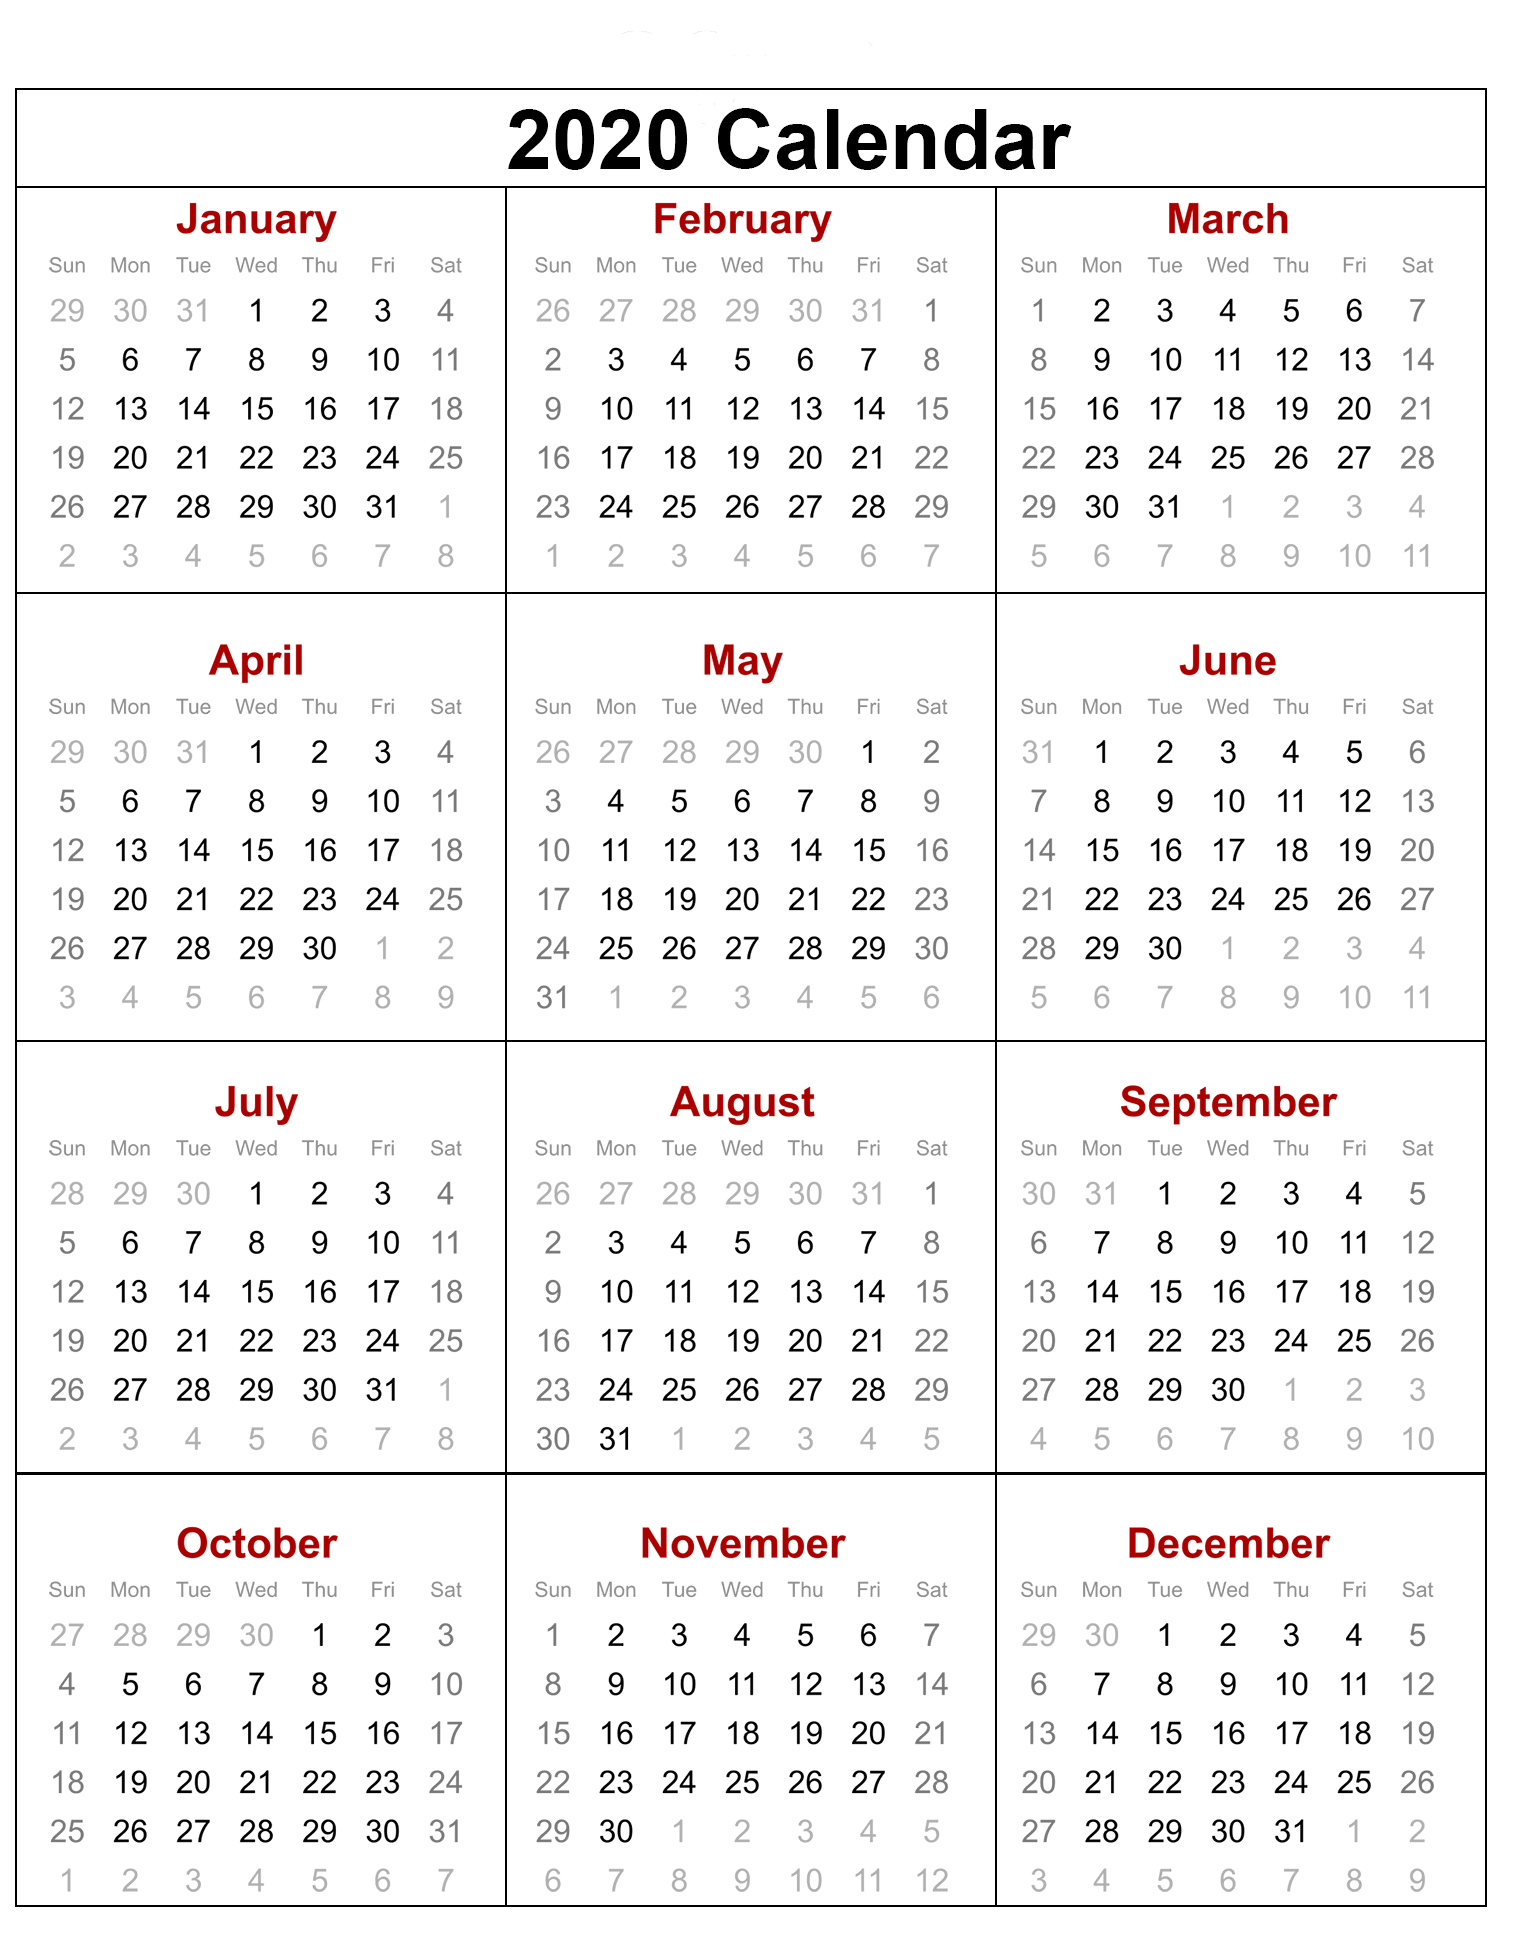 2020-calendar-excel-templates-printable-pdfs-and-2020-calendar-download